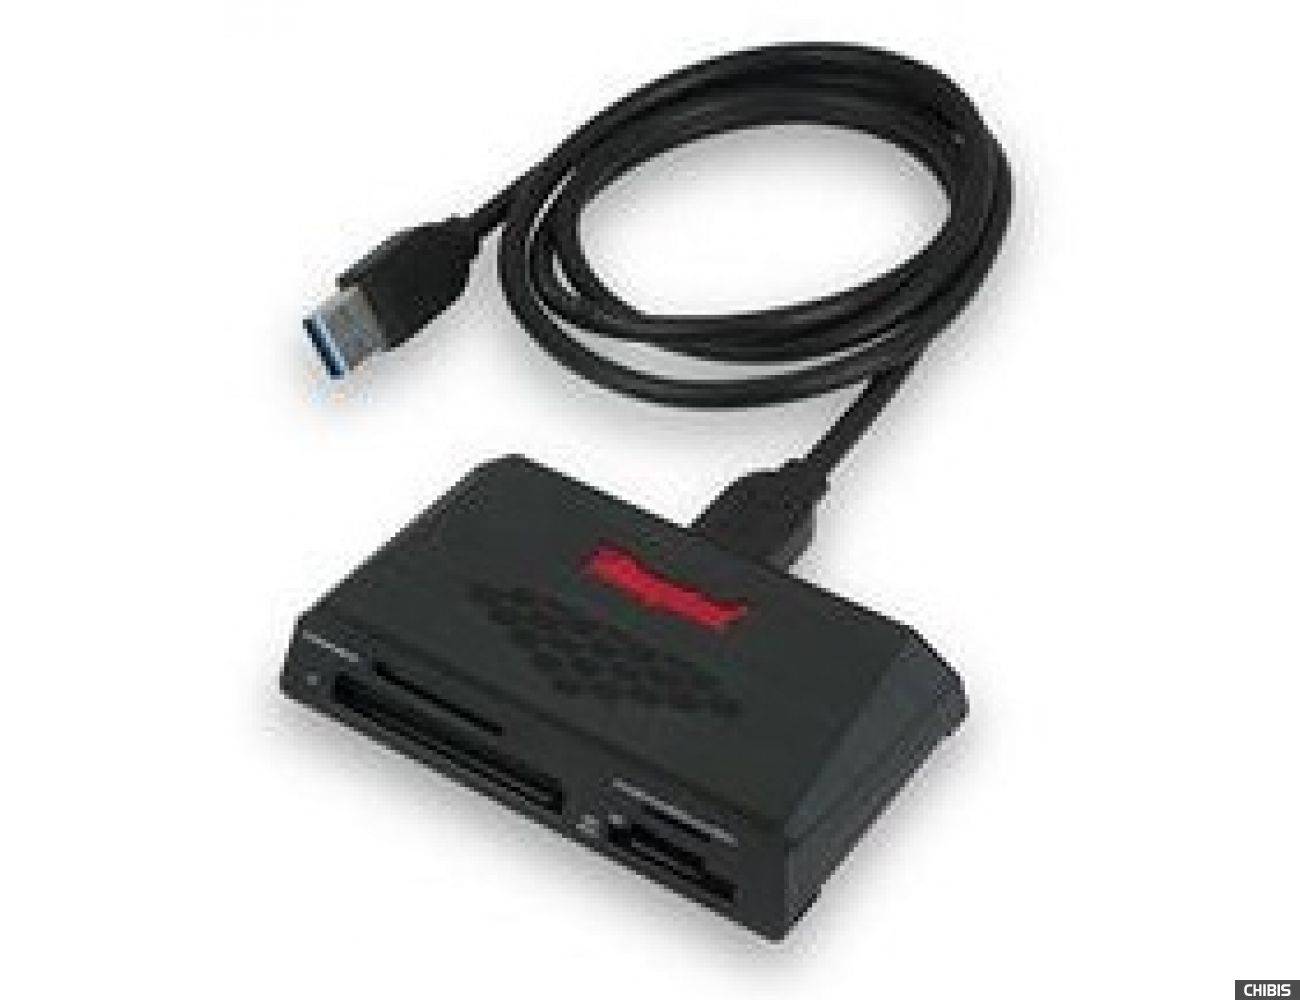 Кардридер Kingston USB 3.0 (FCR-HS3)